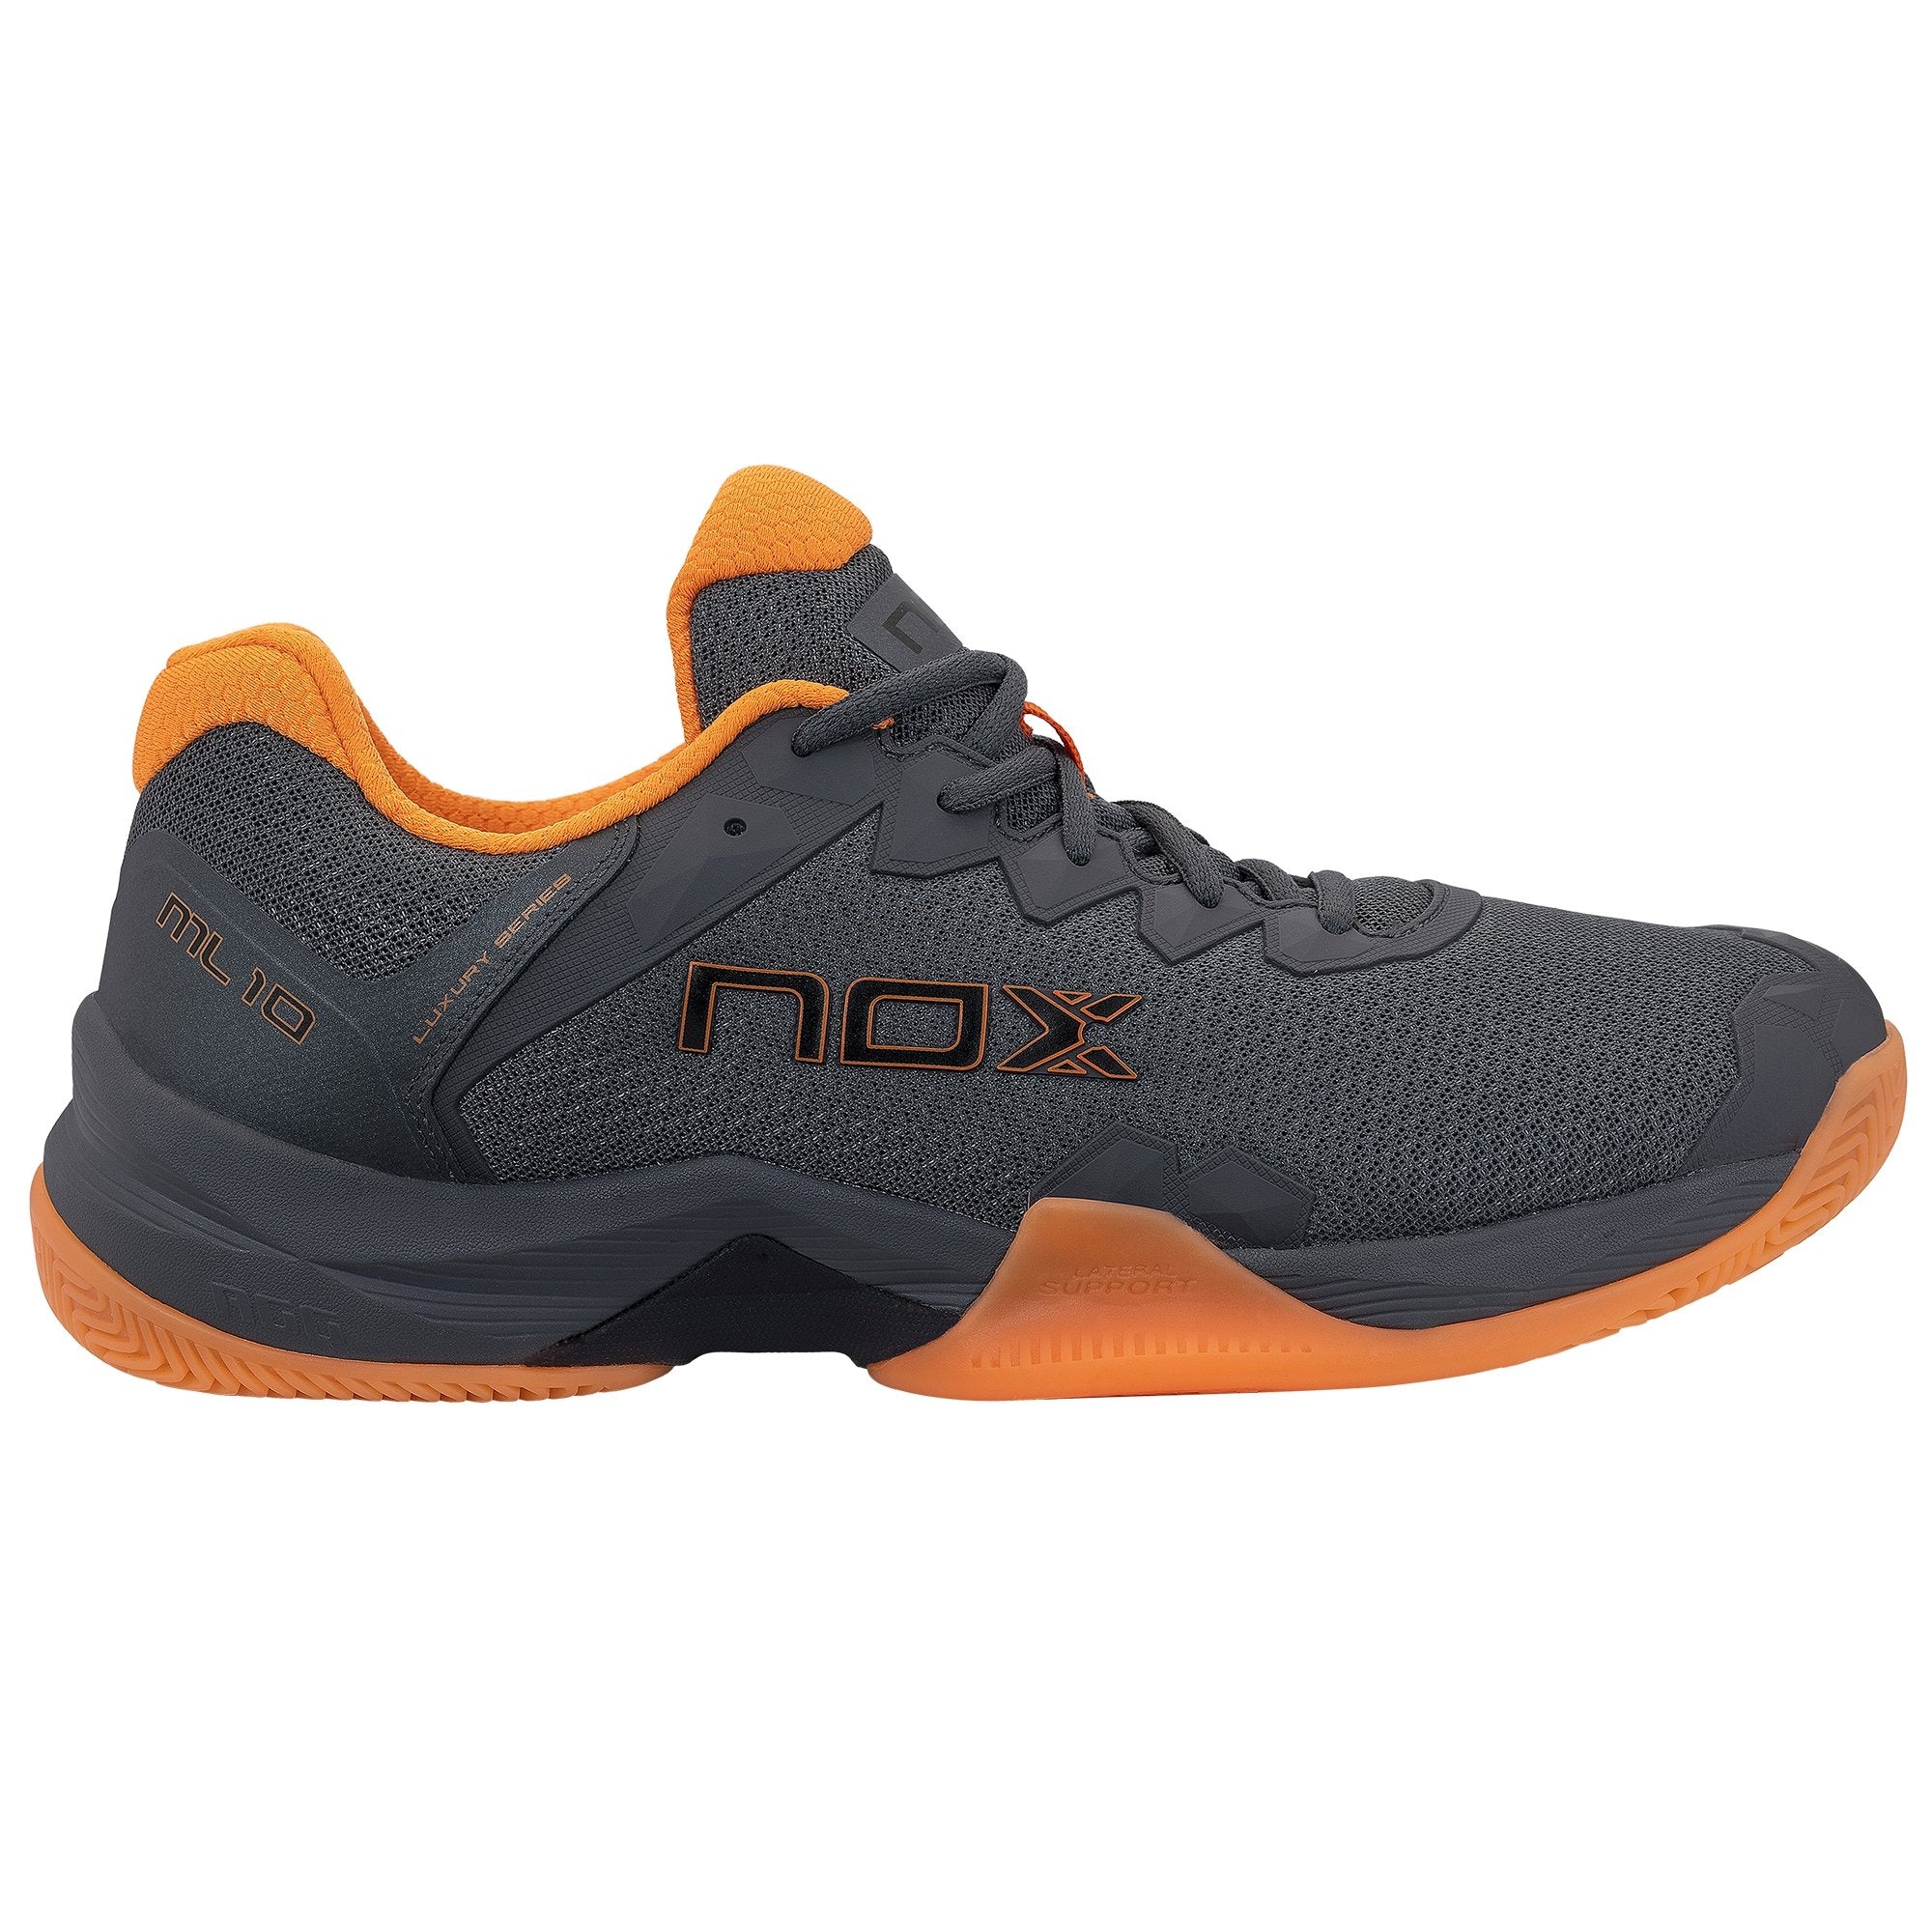 Zapatillas De Pádel Nox Ml10 Hexa - gris-naranja - 